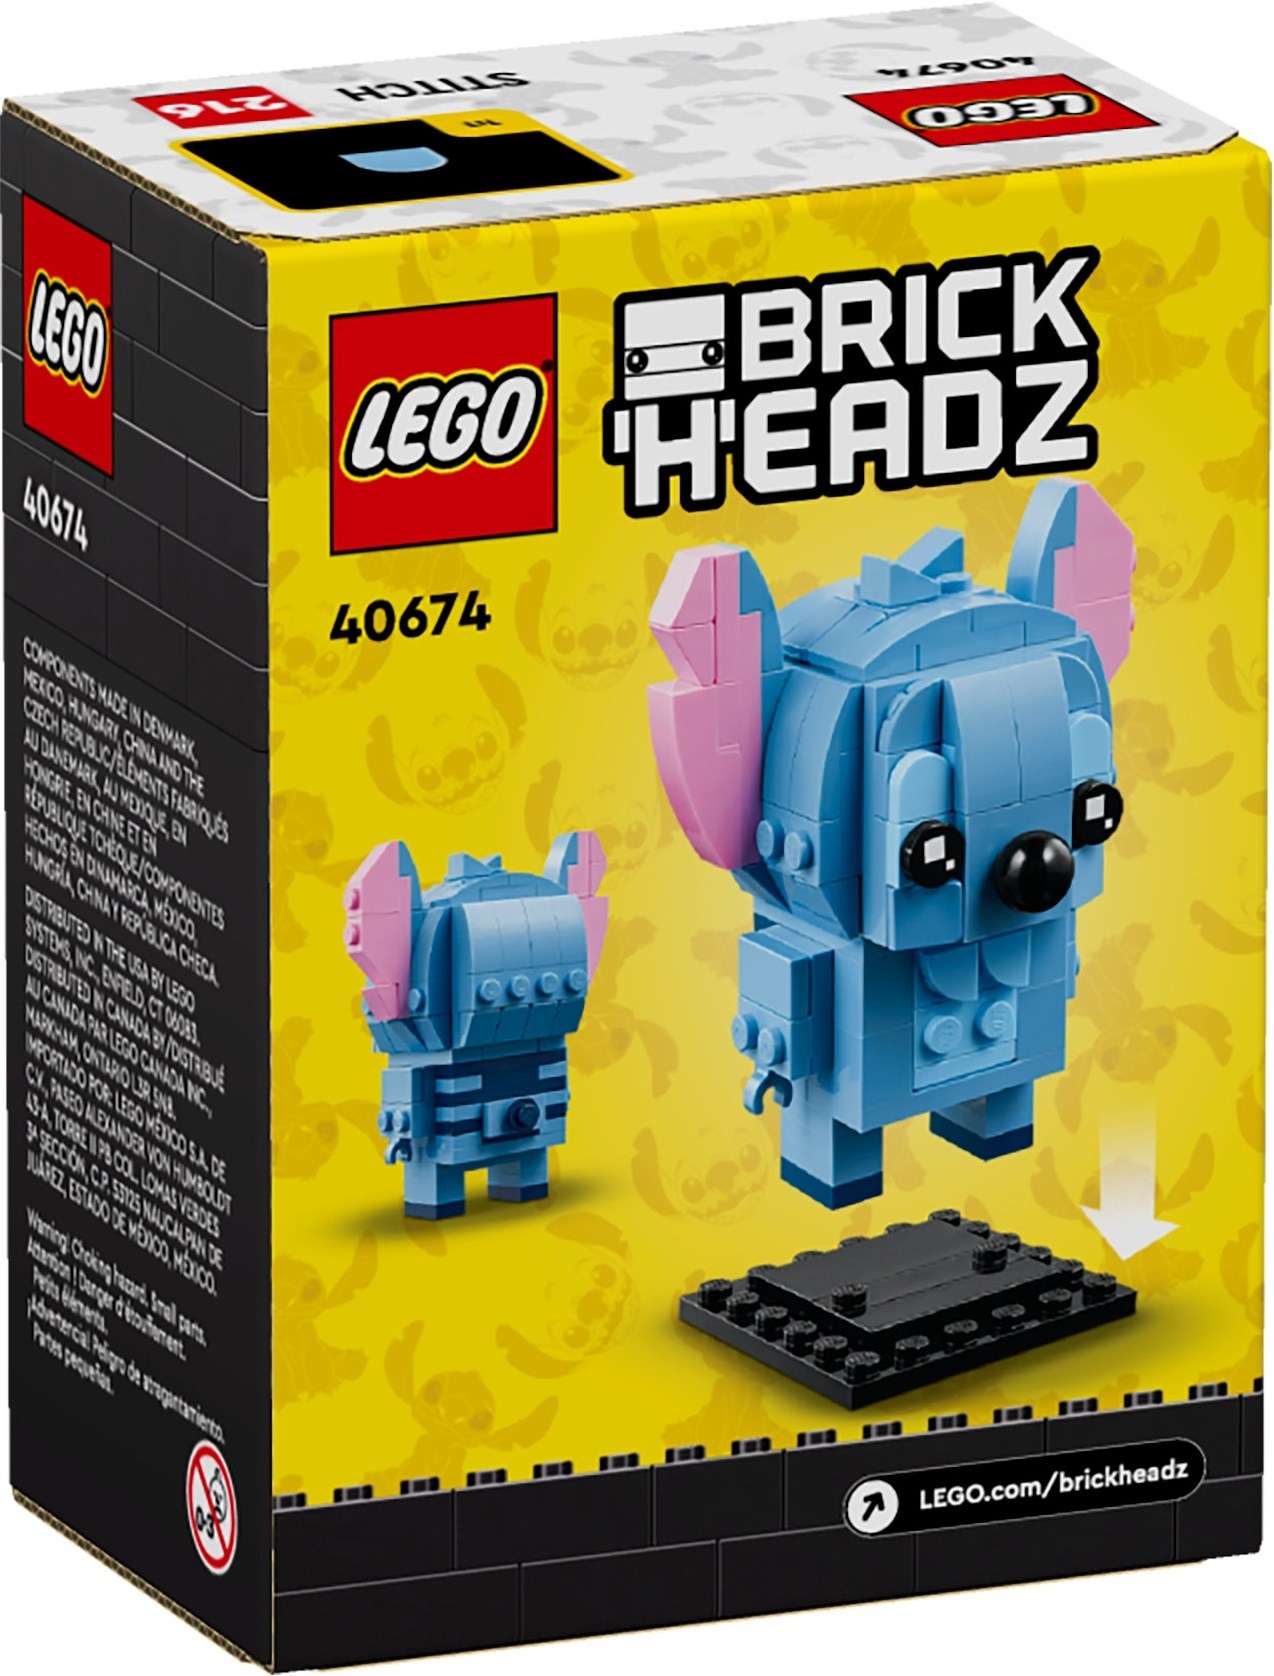 Stitch 40674, BrickHeadz